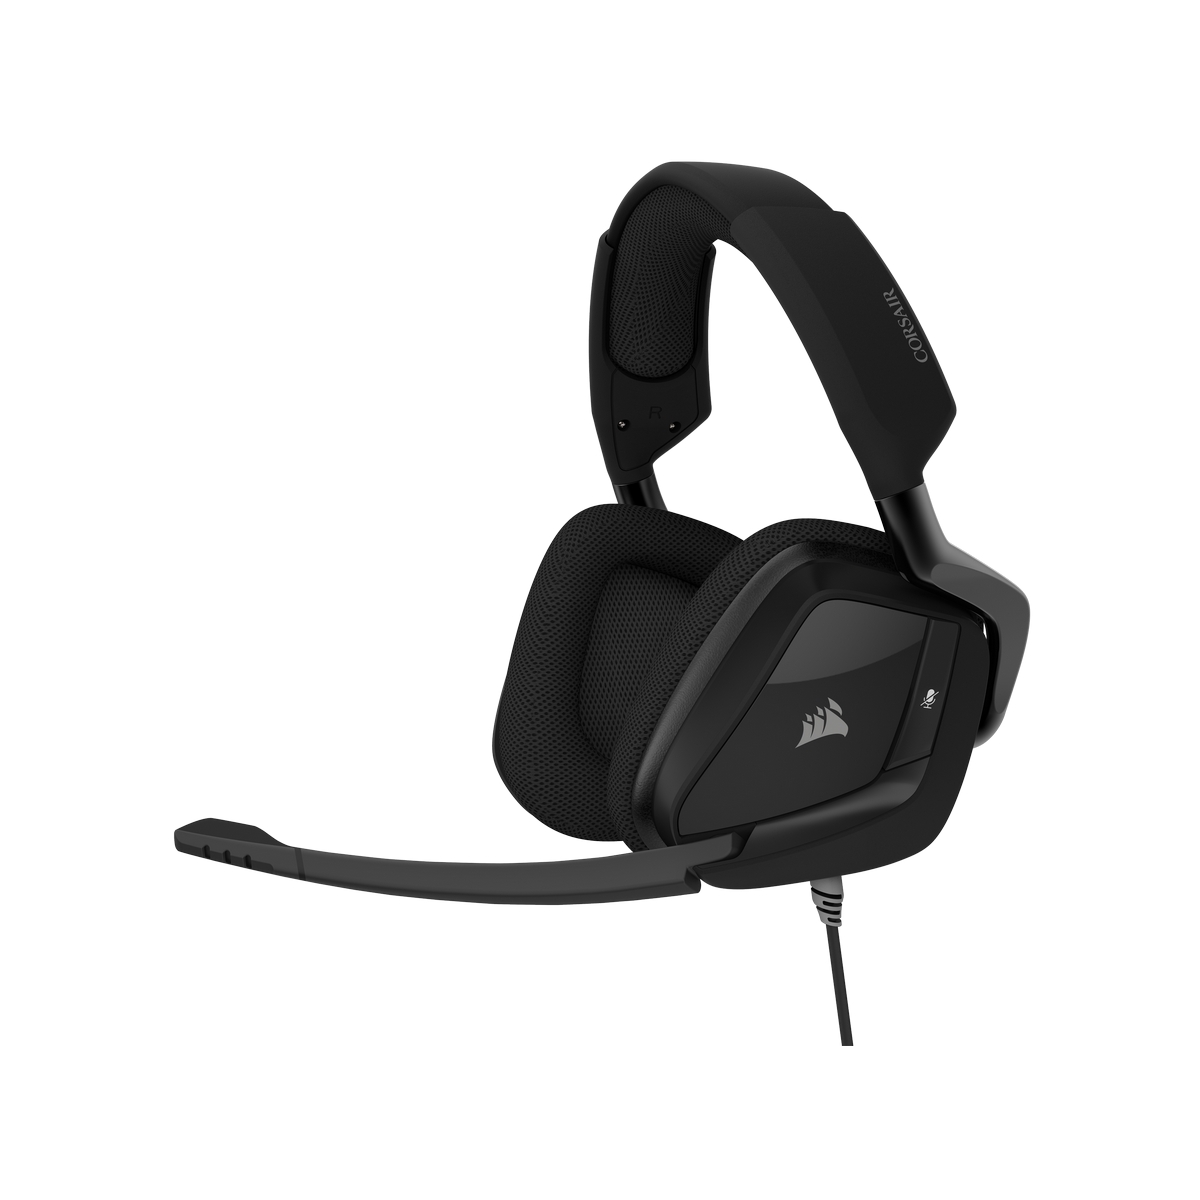 Corsair VOID ELITE SURROUND Premium Gaming Headset with 7.1 Surround Sound, Carbon (CA-9011205-EU)